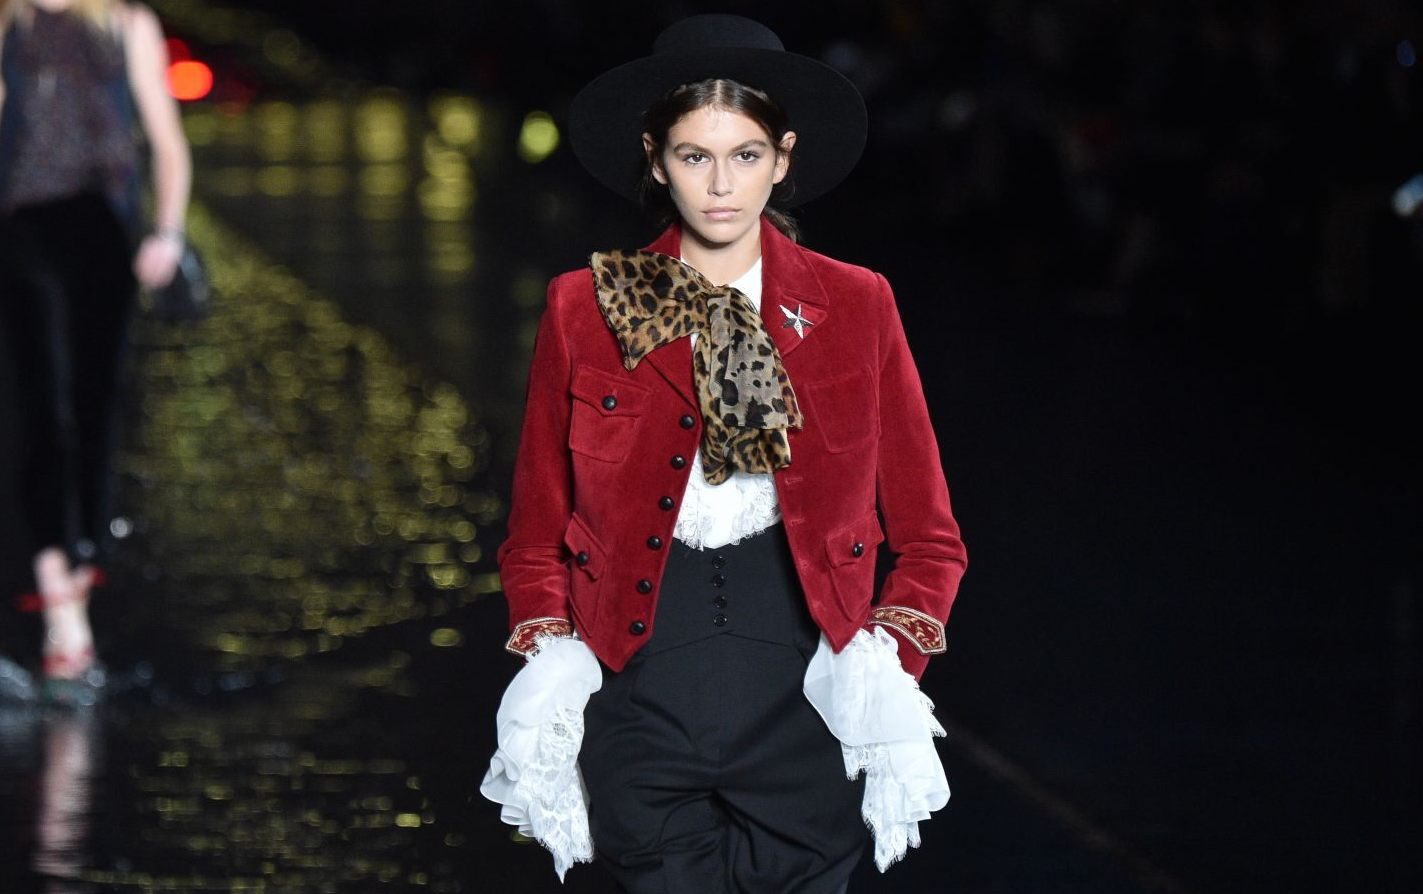 the owner of Gucci, Bottega Veneta more will stop hiring models under 18 - Luxurylaunches